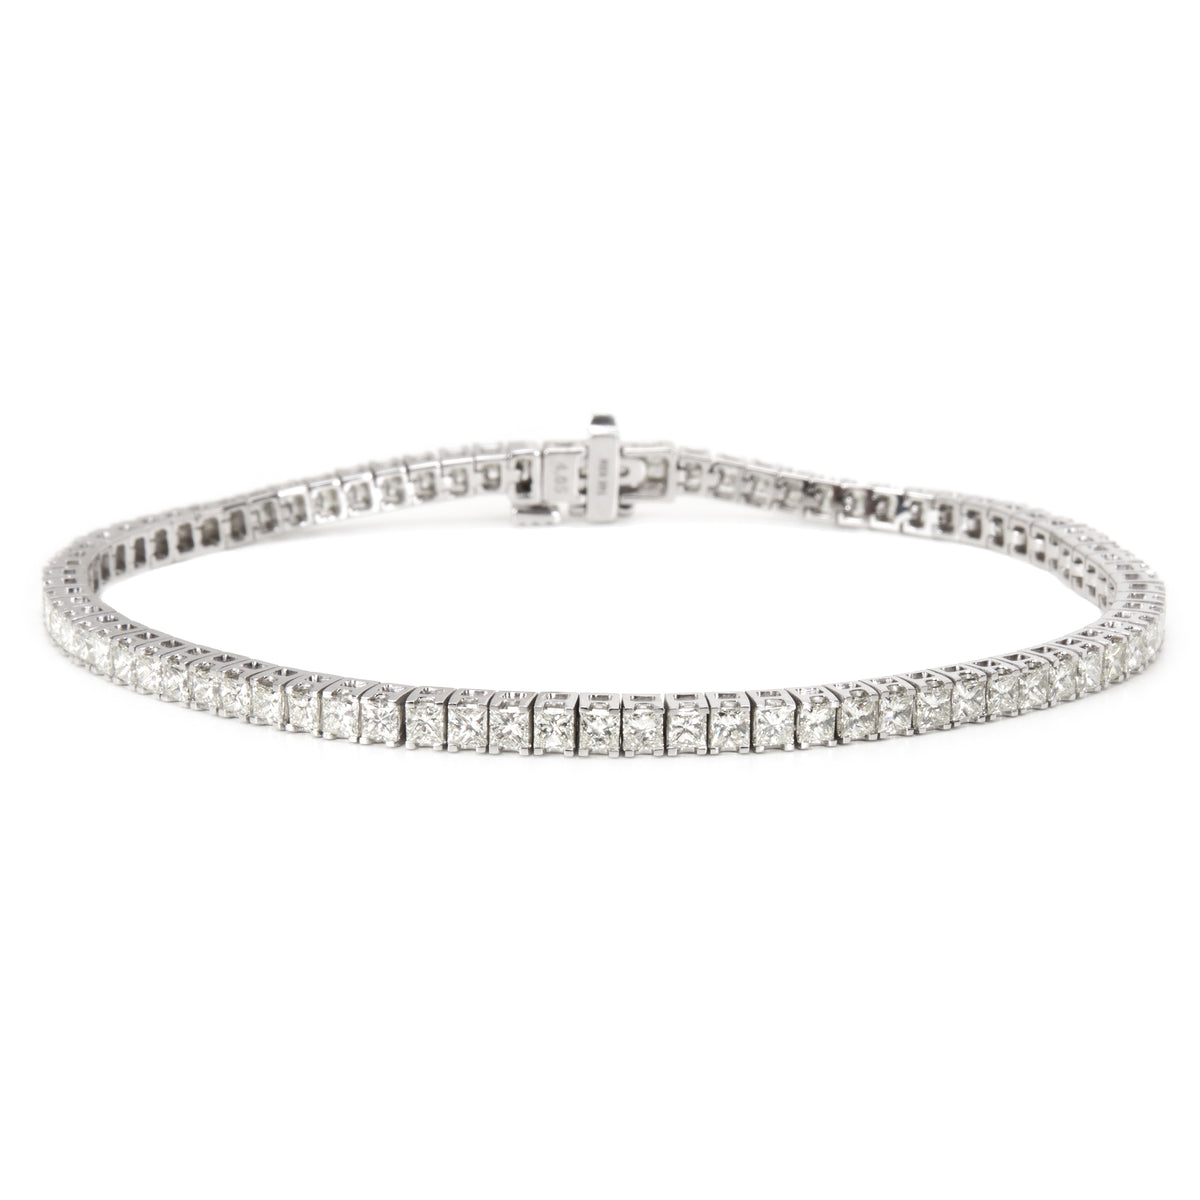 Princess Cut Diamond Tennis Bracelet in 14KT White Gold 4.17 ctw